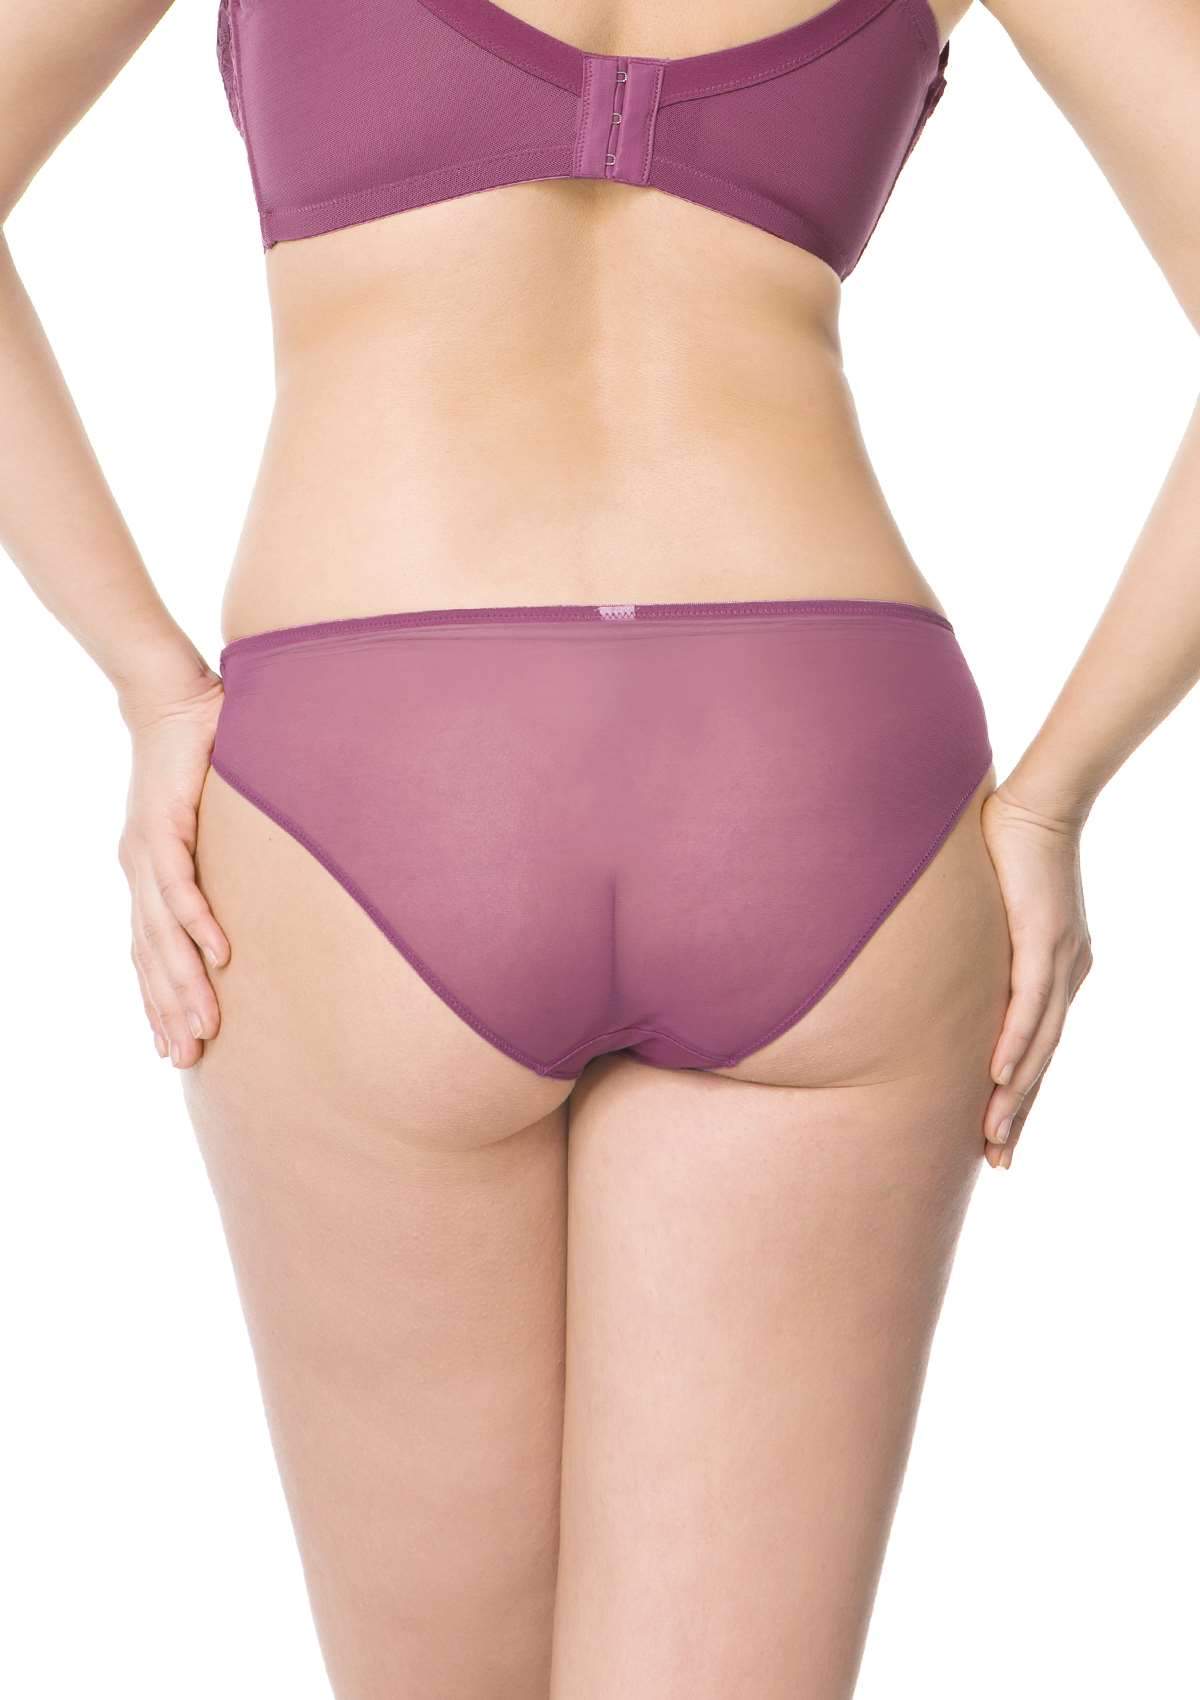 HSIA Peony Lace Mesh Everyday Bikini Underwear 3 Pack - M / Light Coral+Green+Purple